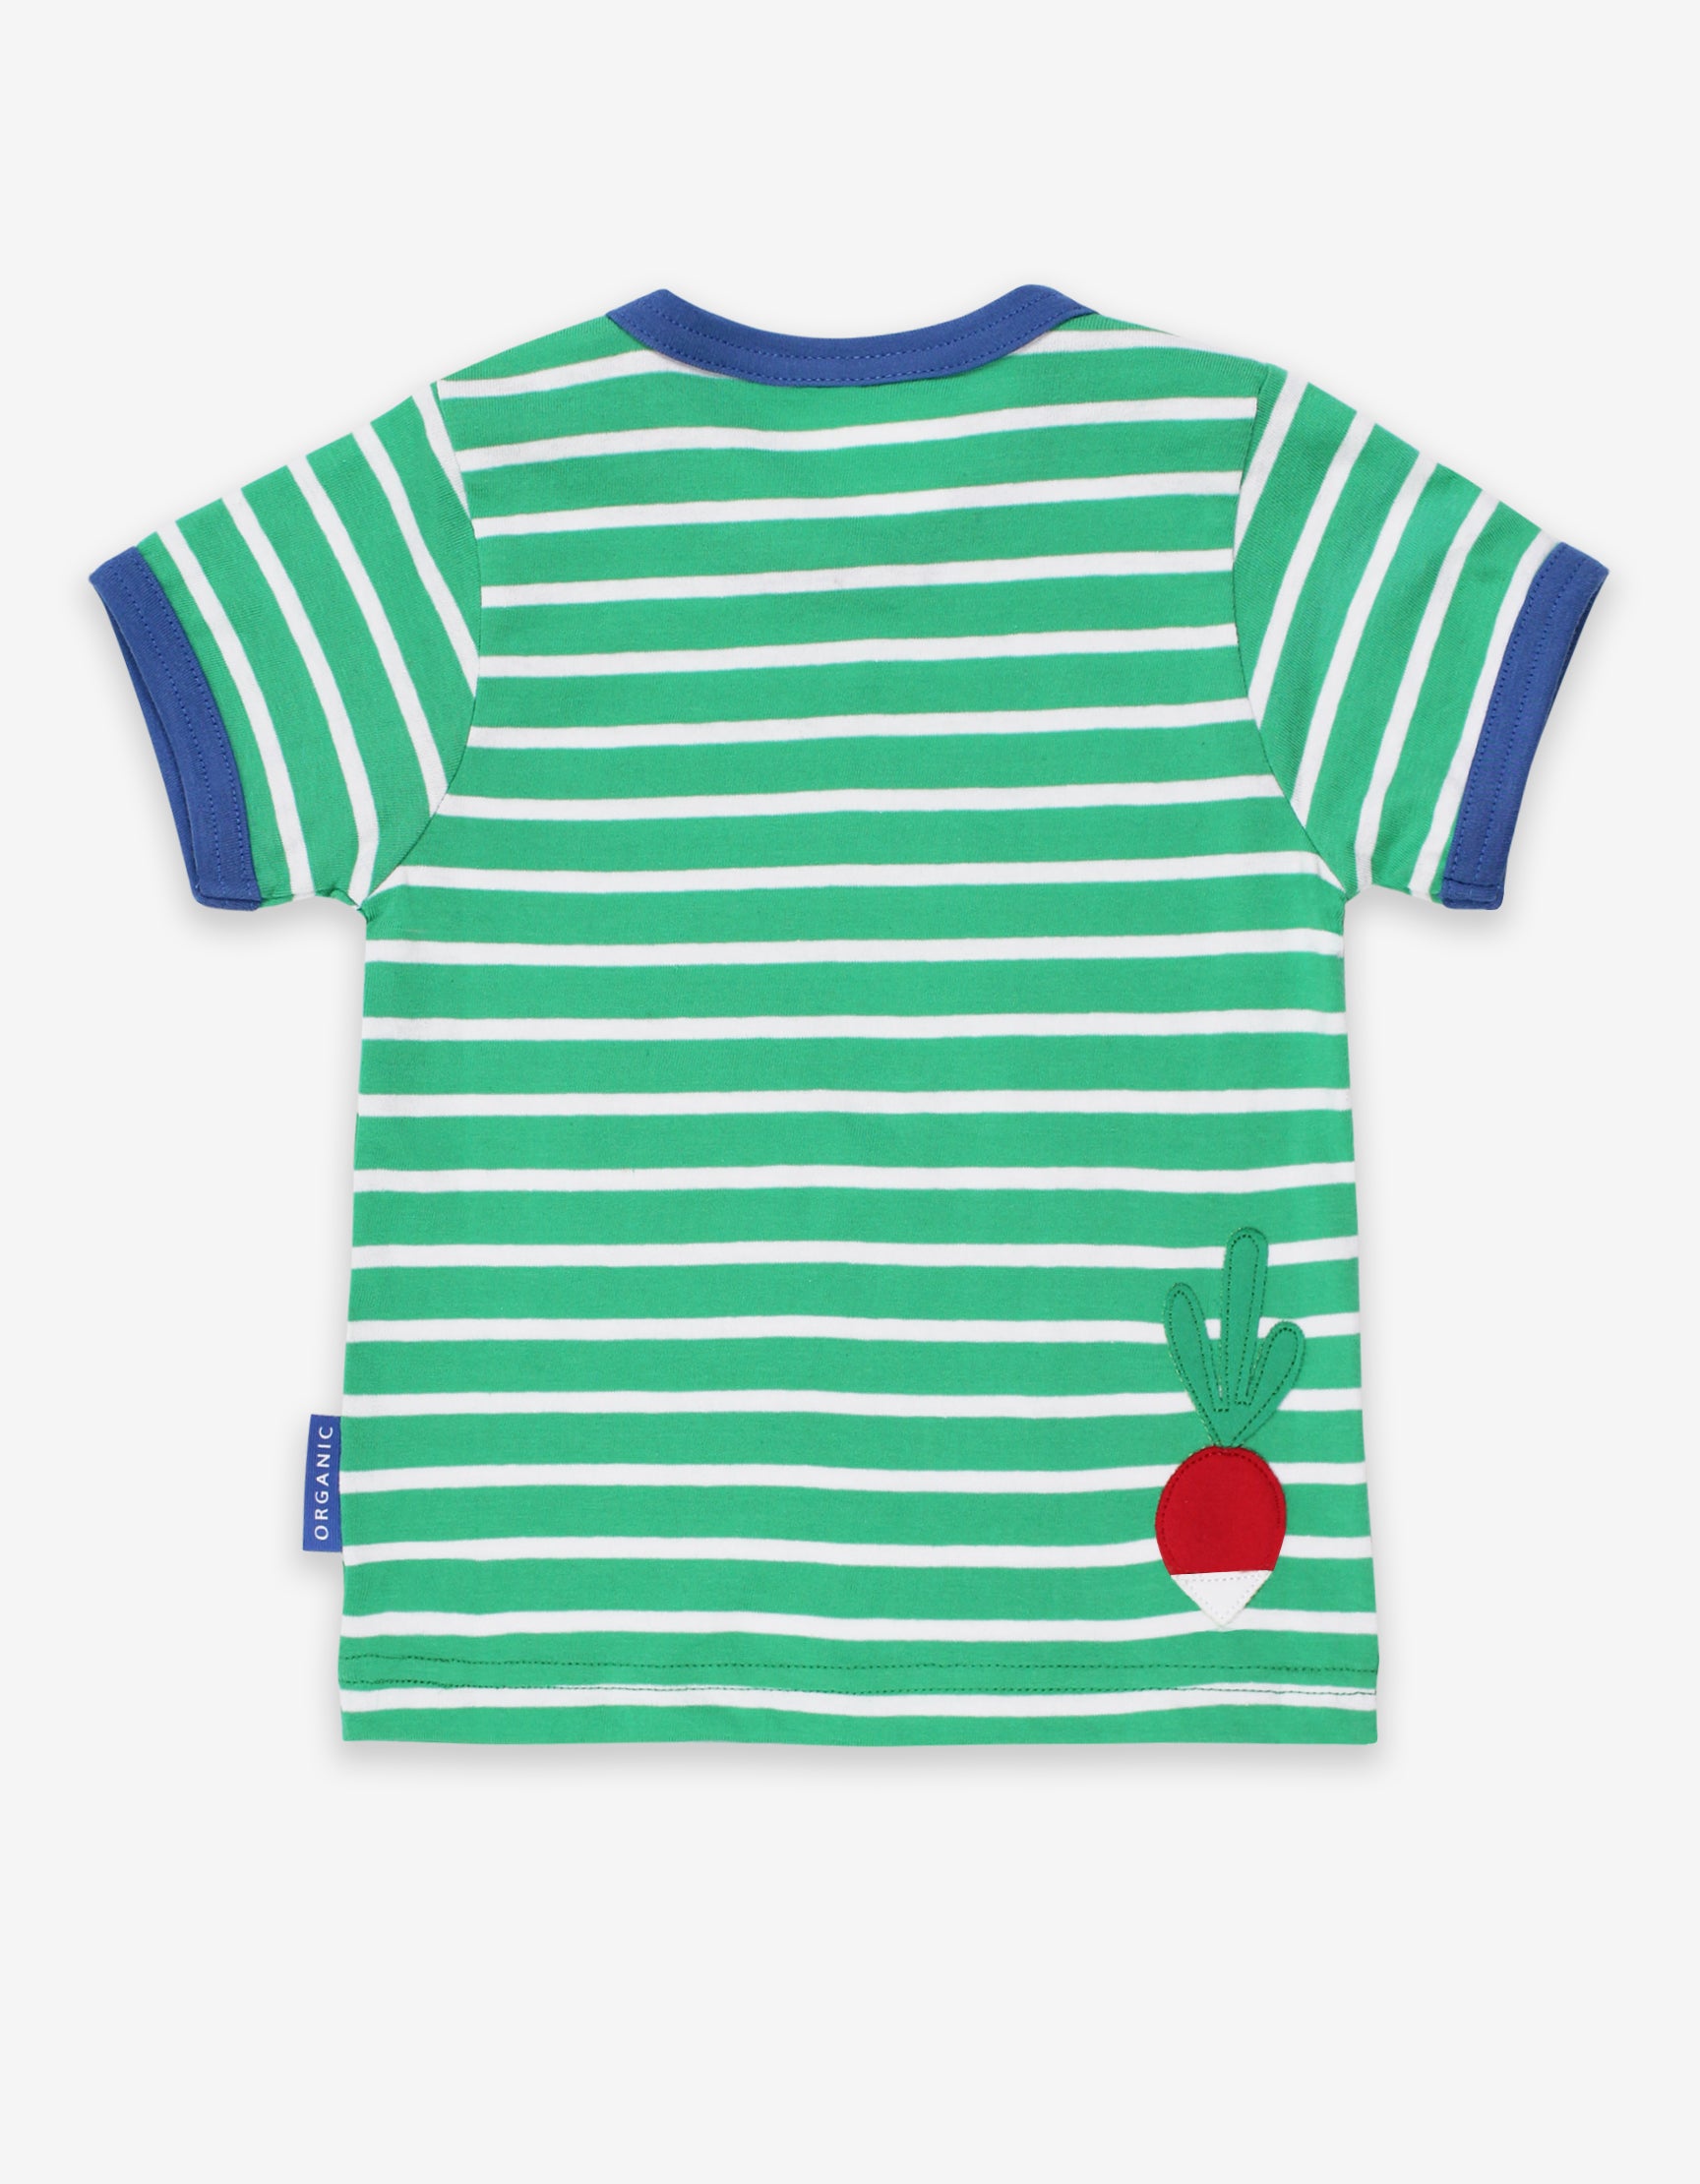 Toby Tiger Organic Short Sleeve T-Shirt - Snail Applique